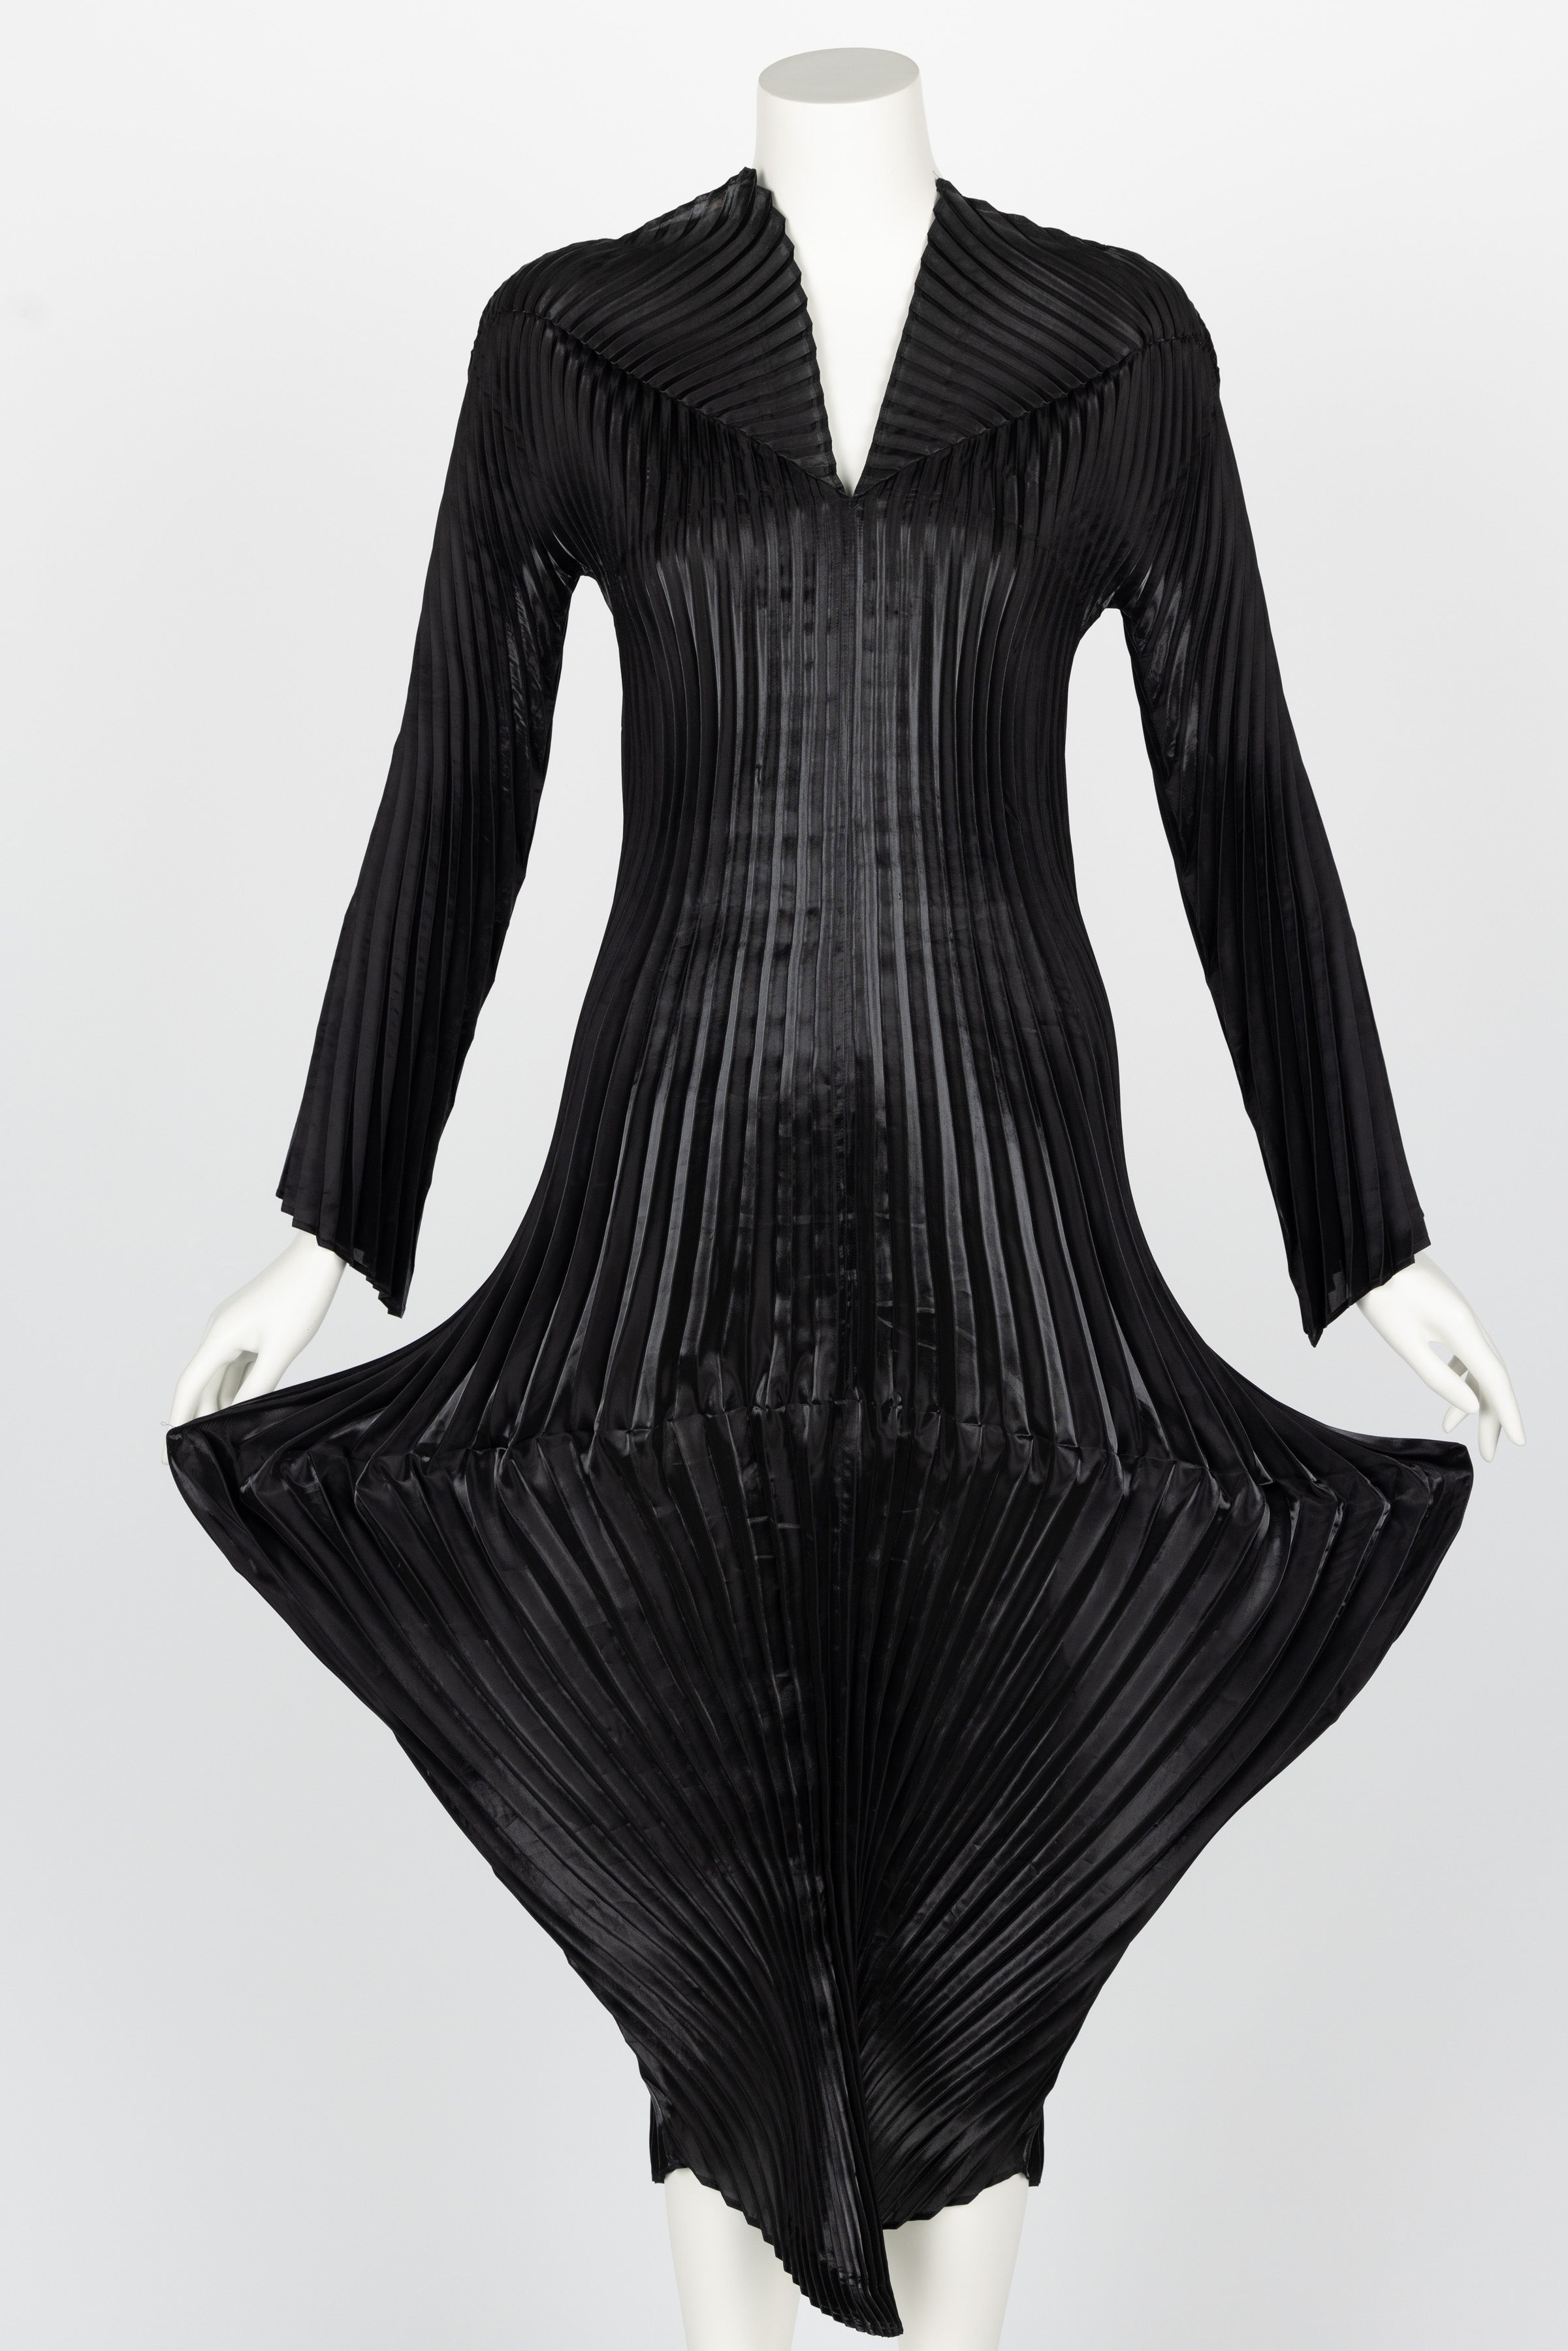 Collectors Issey Miyake Fall 1999 Documented Metallic Black Dress 1